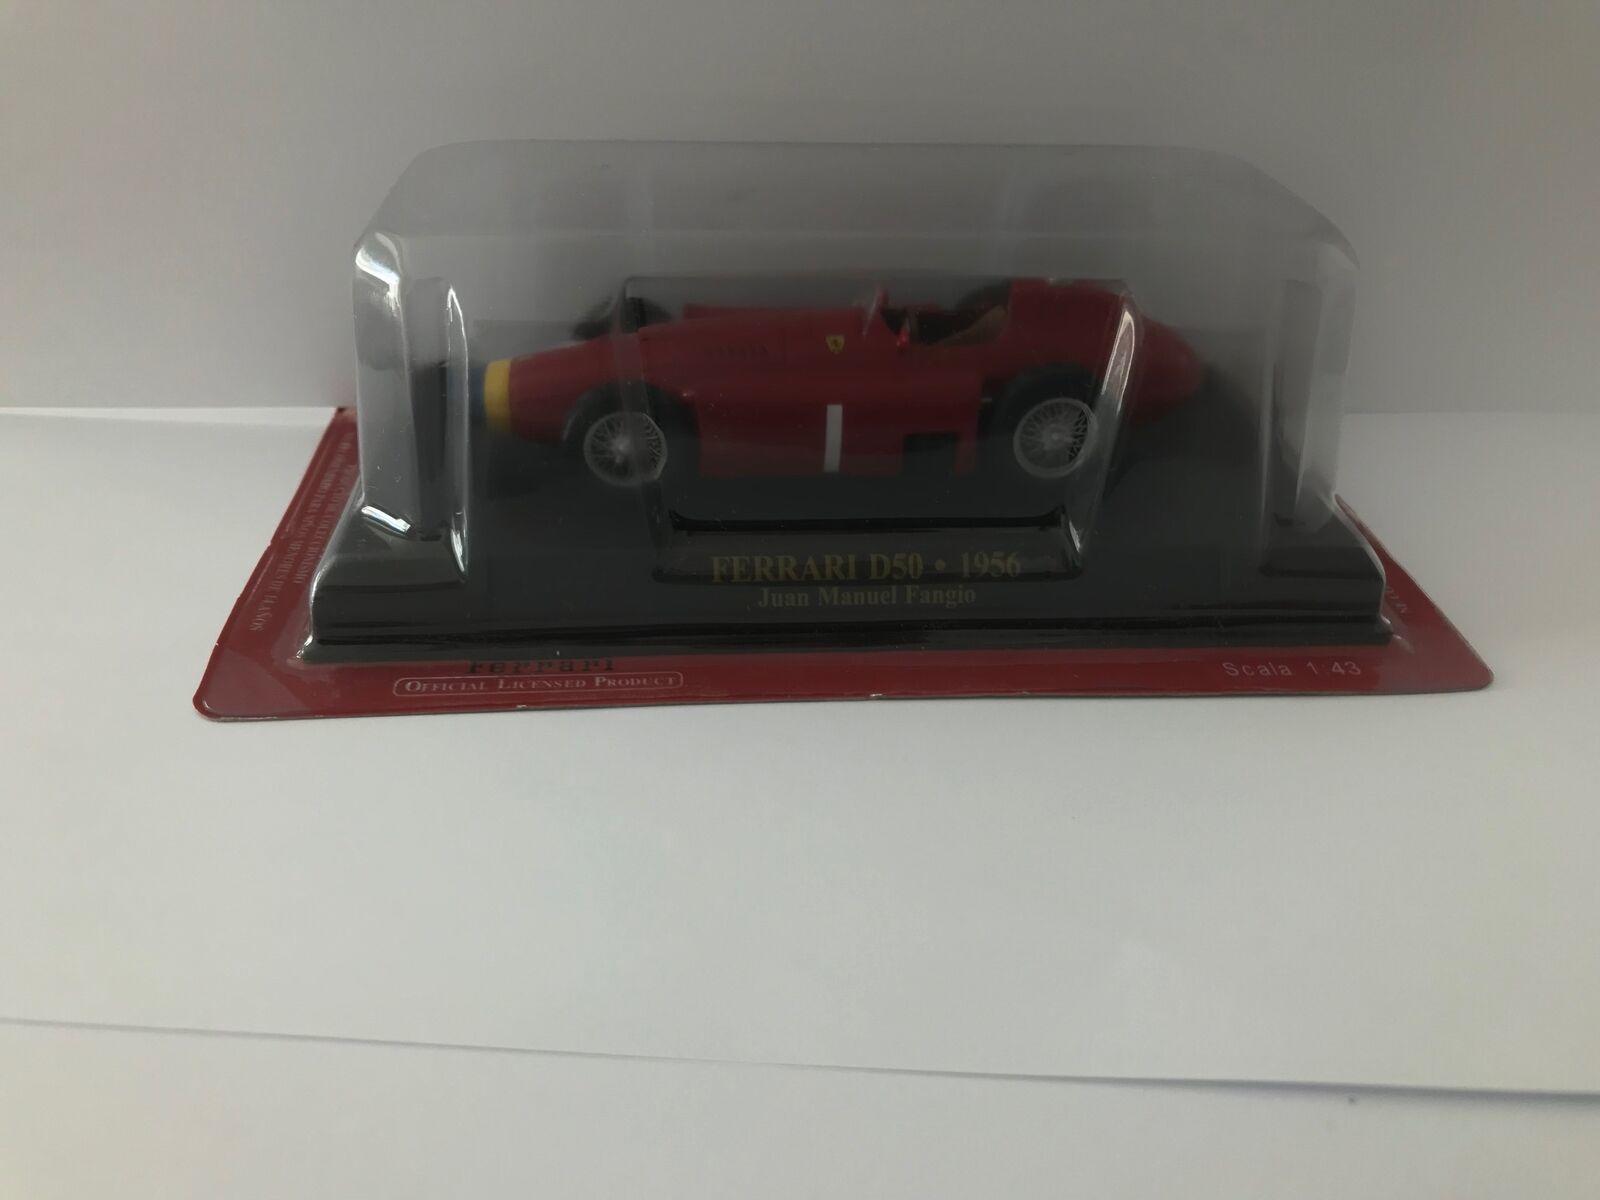 Ferrari D50